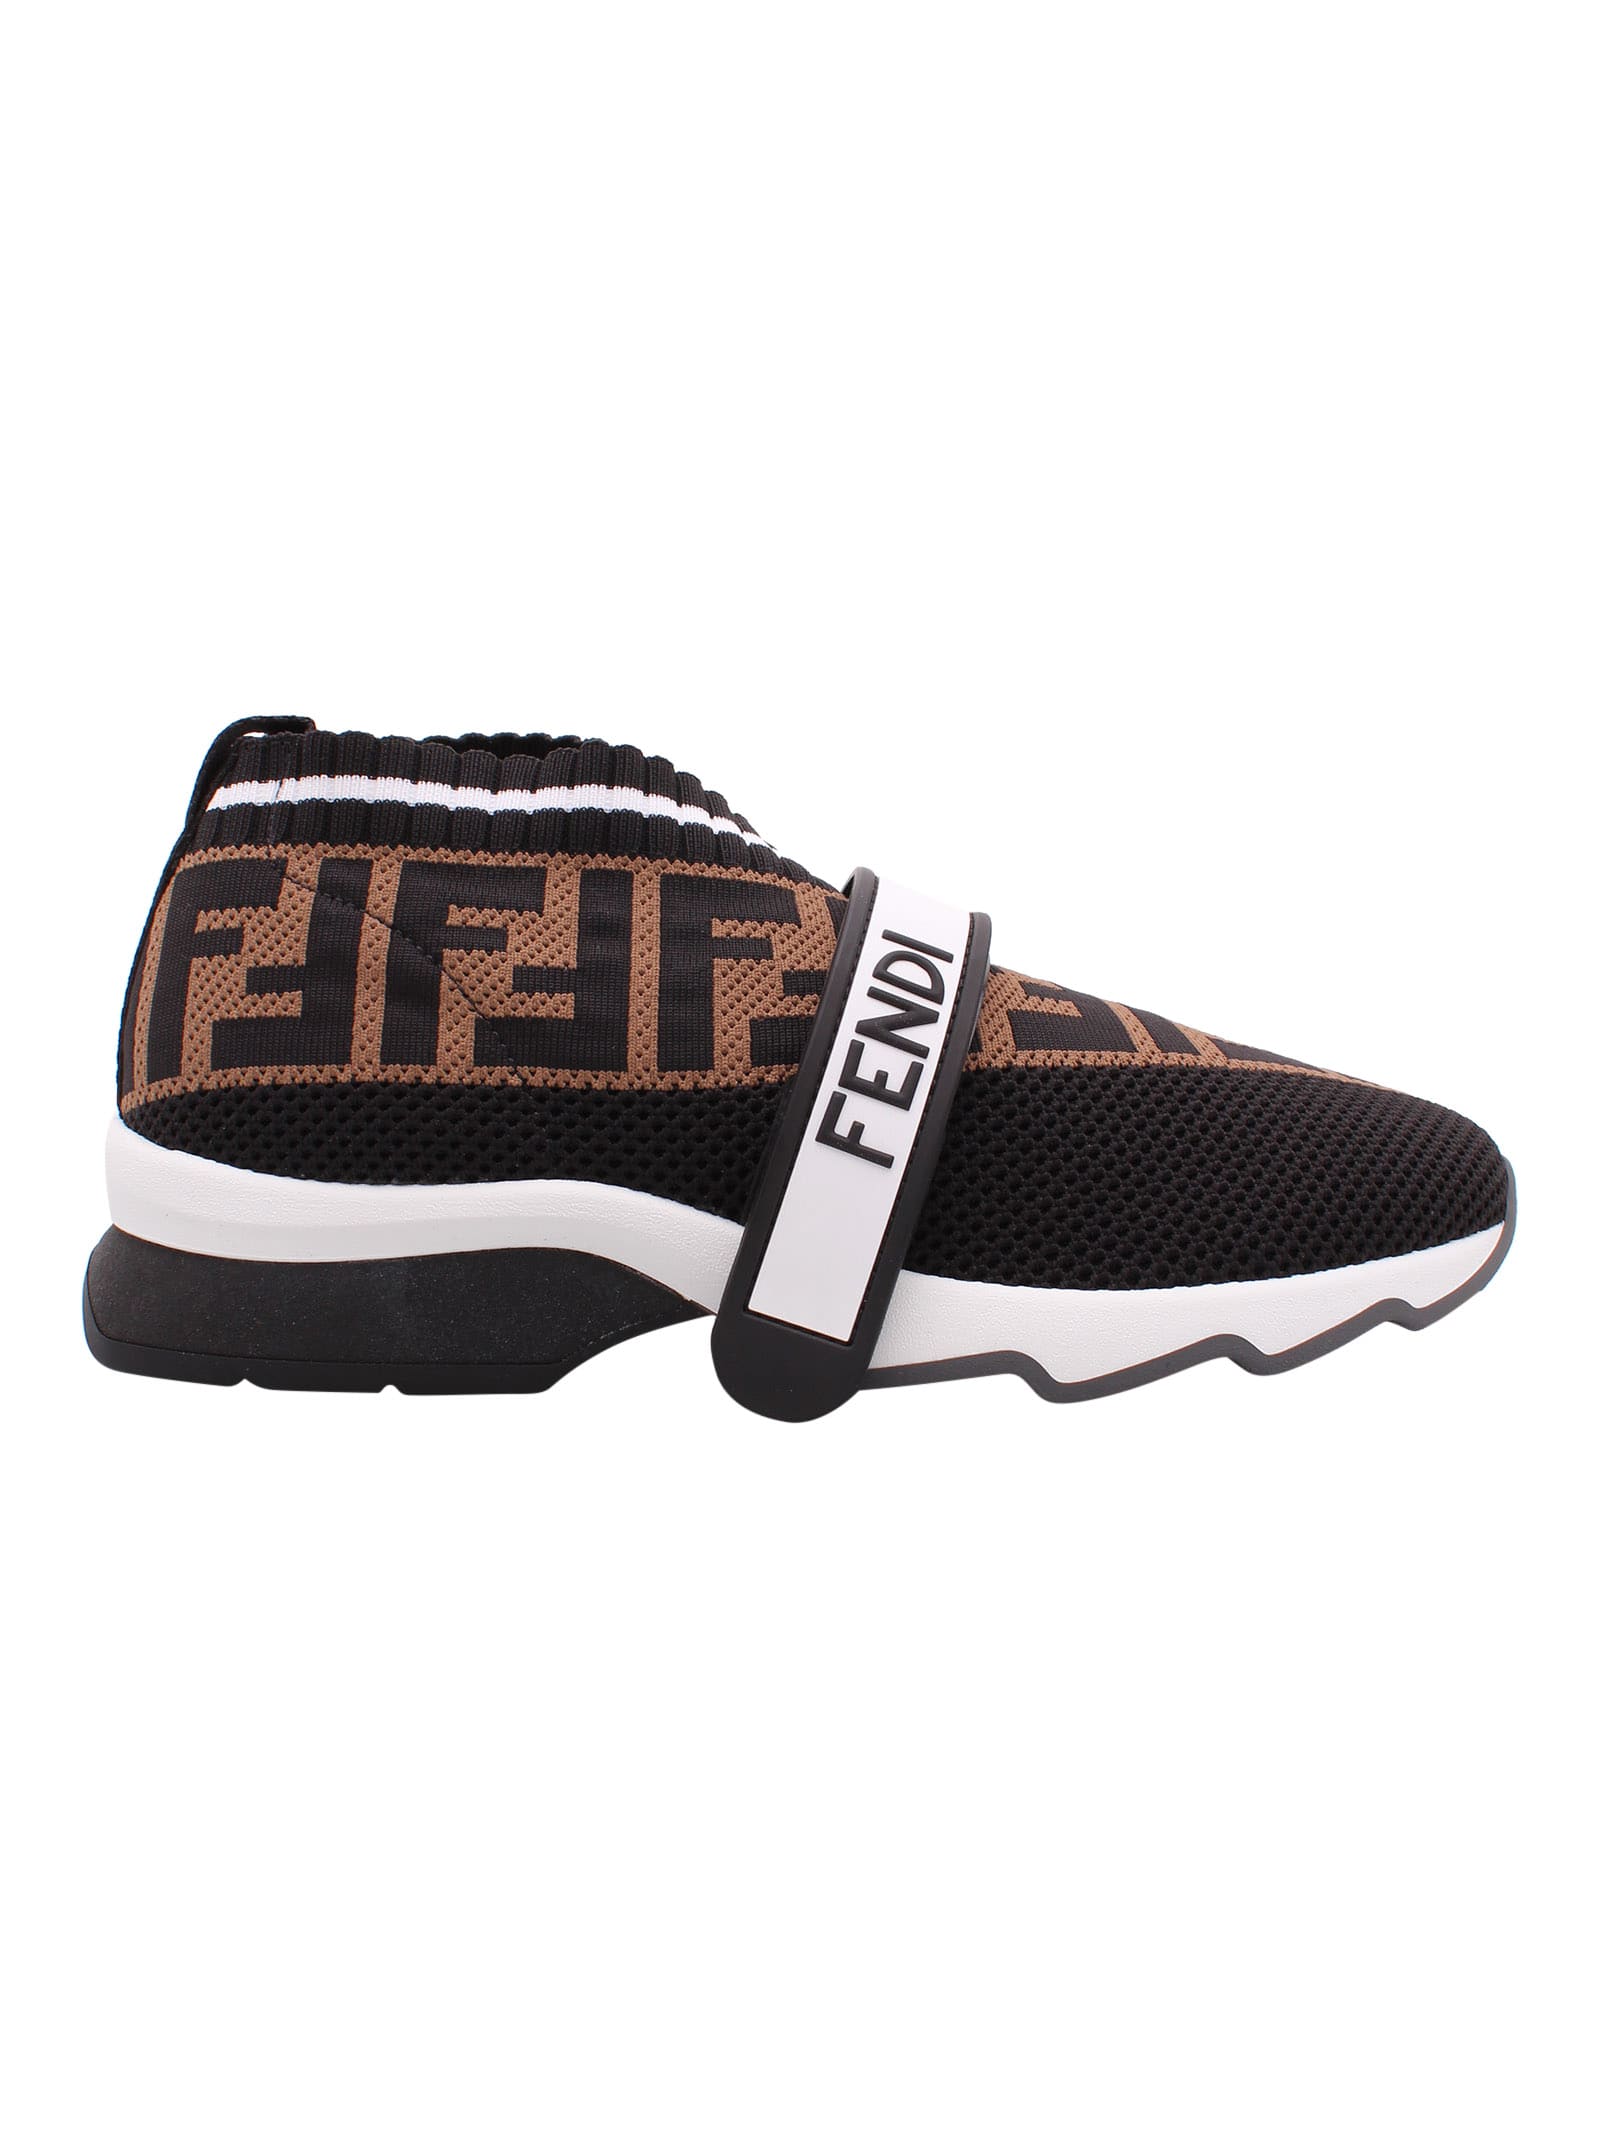 Fendi Leather Sneaker In Brown